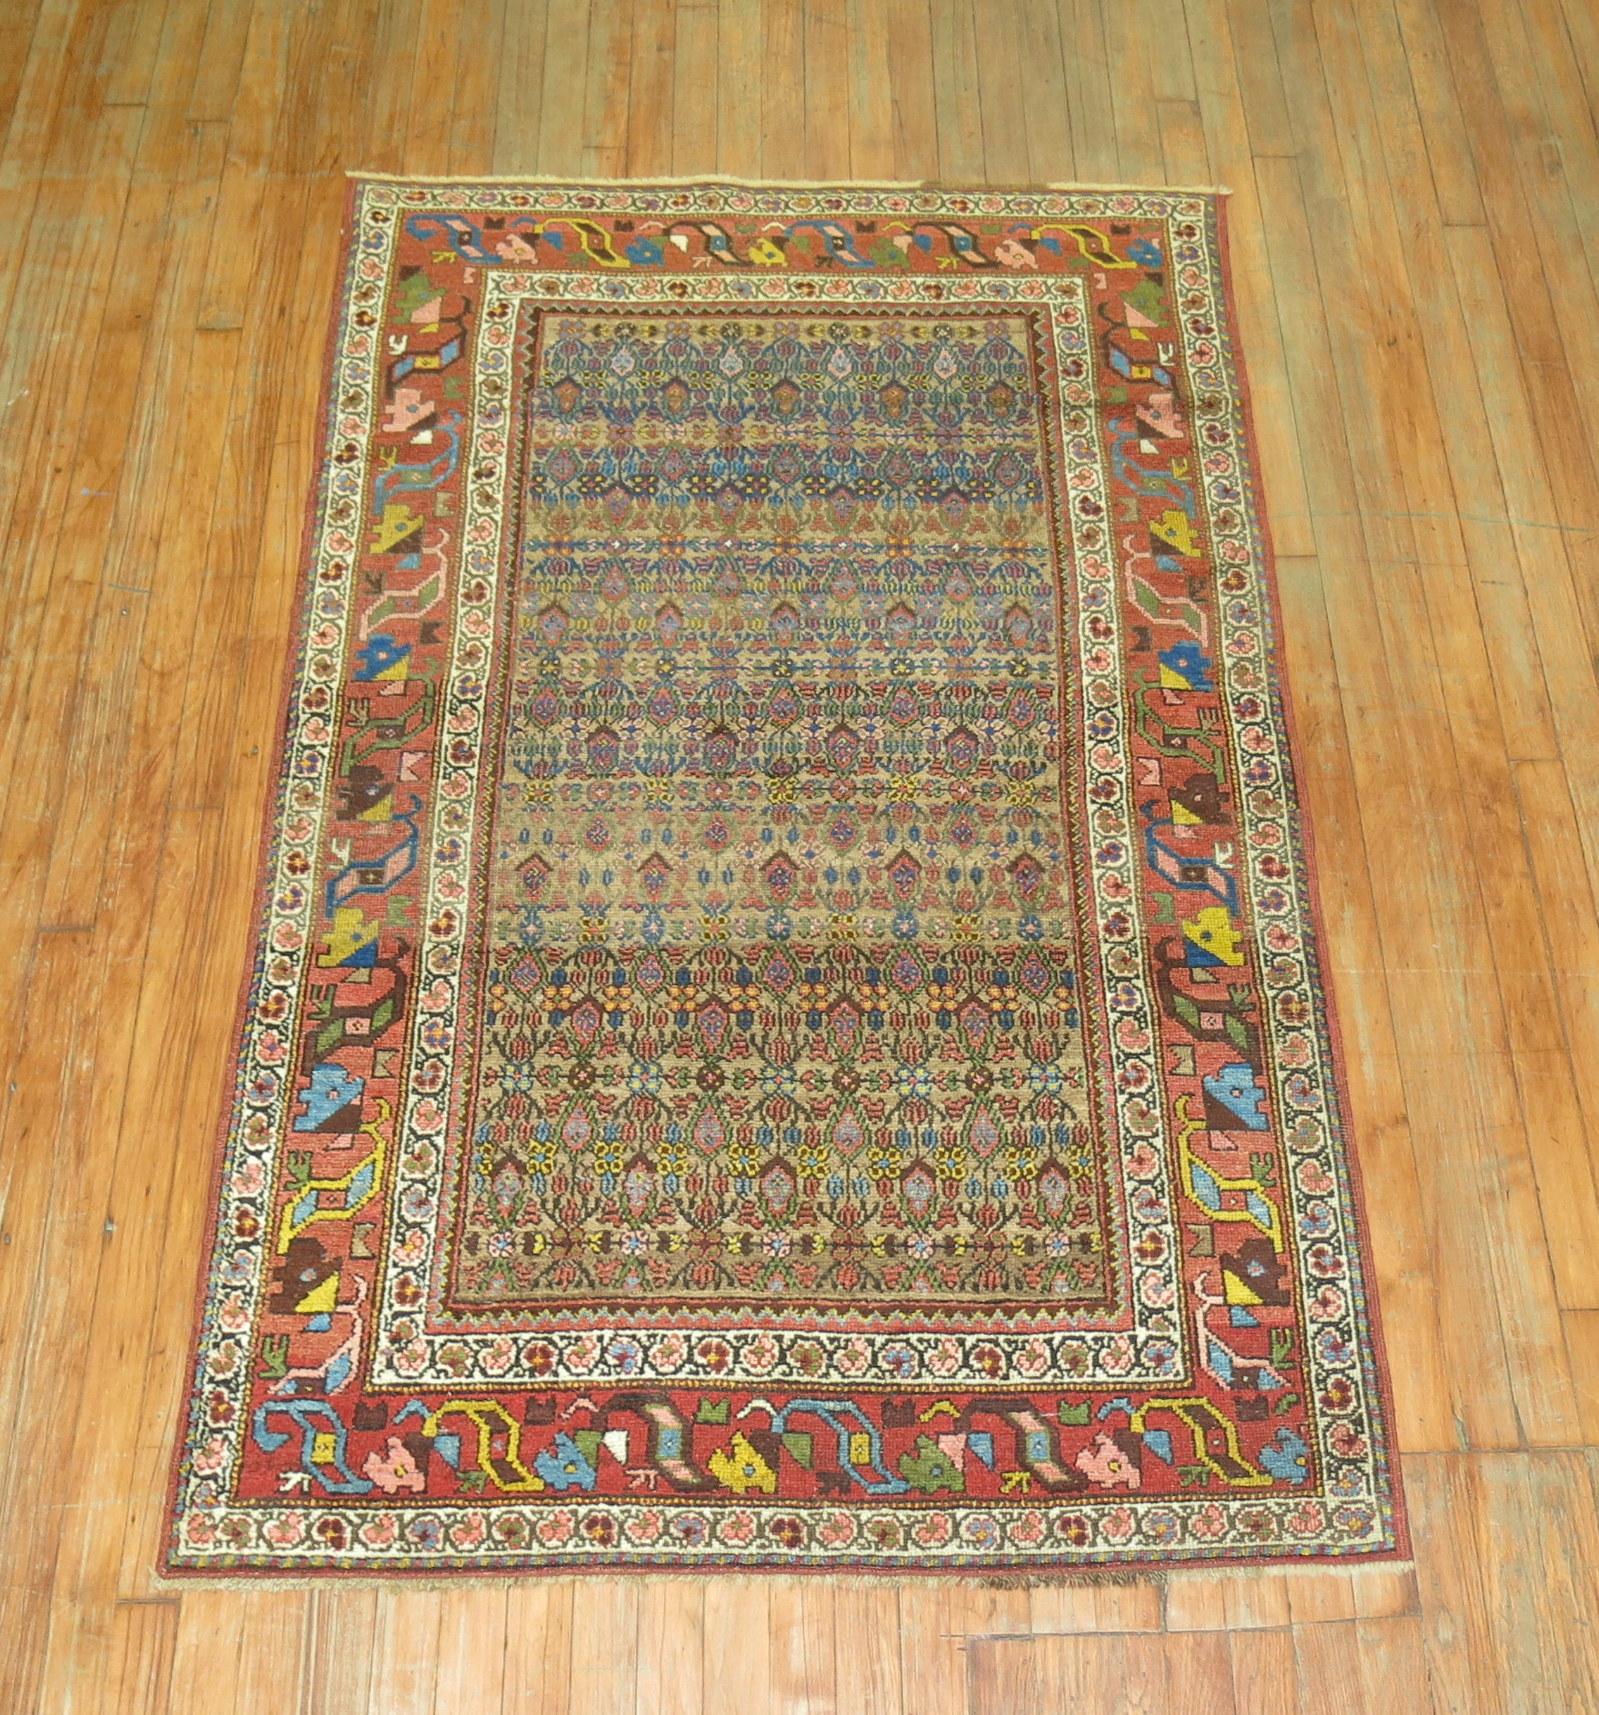 A colorful early 20th century Persian Kurd Serab rug.